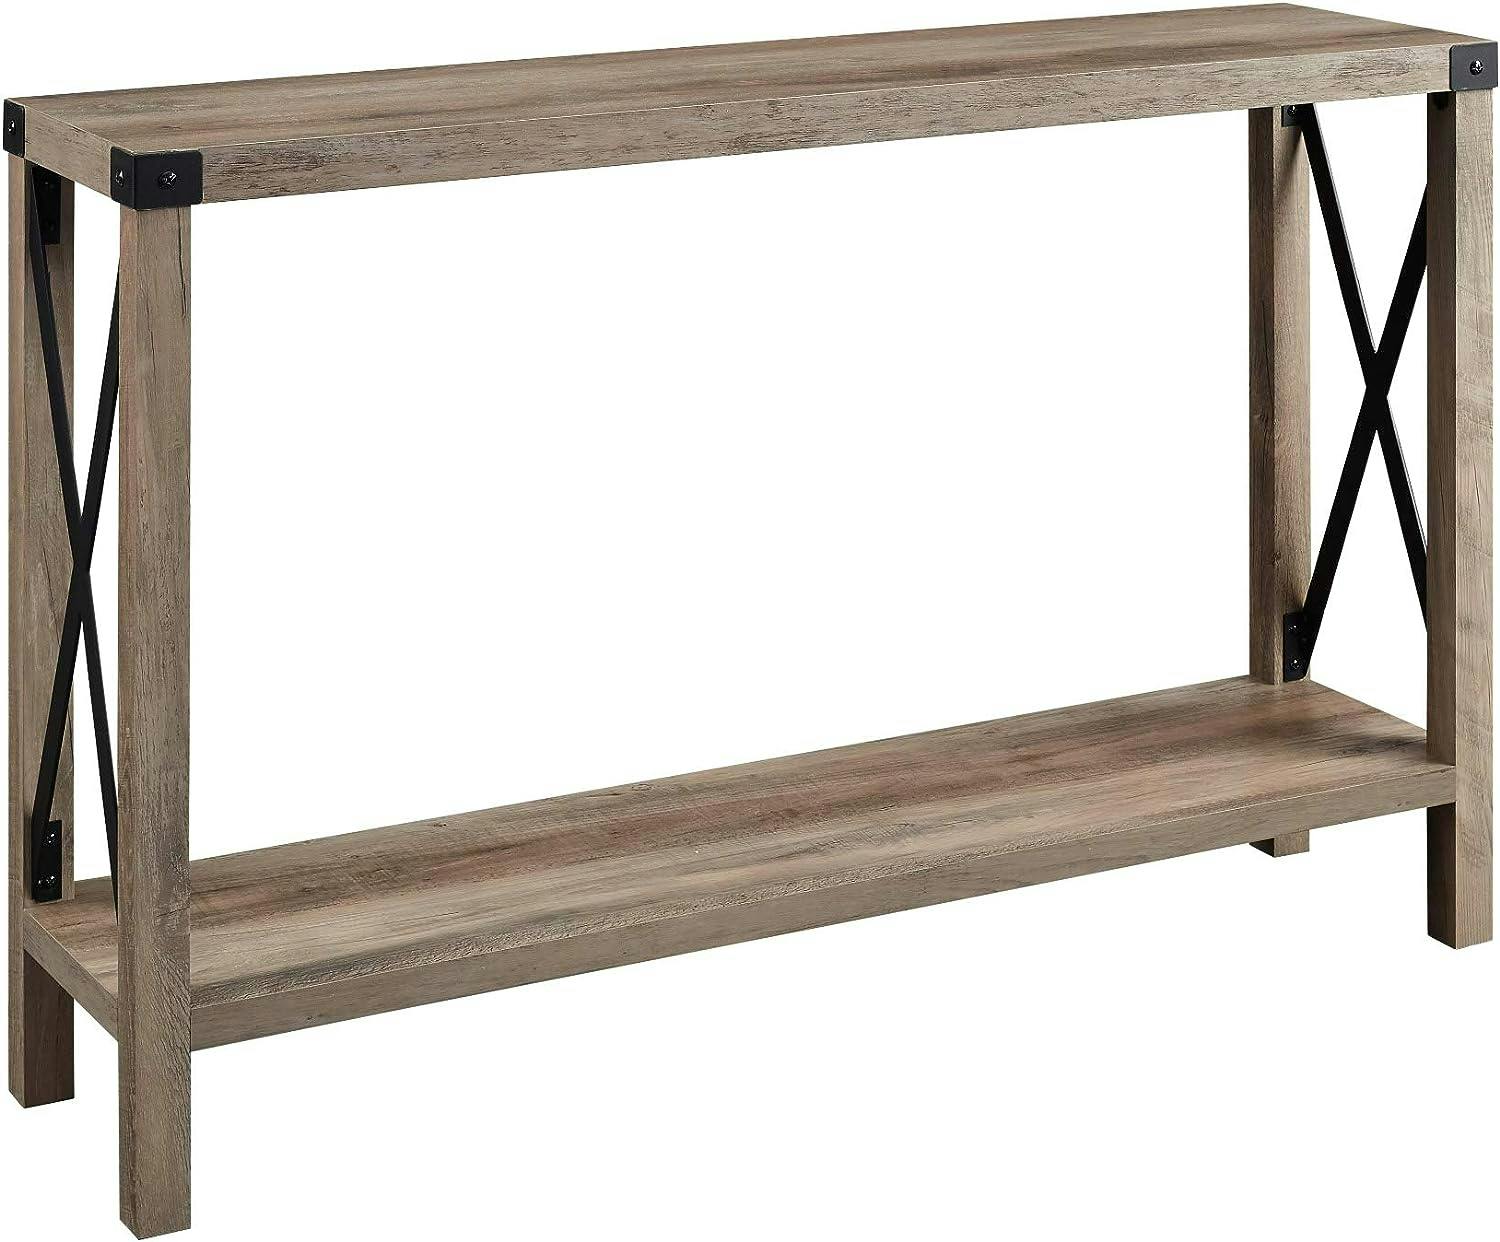 Farmhouse Black Wood & Metal Console Table with Storage Shelf